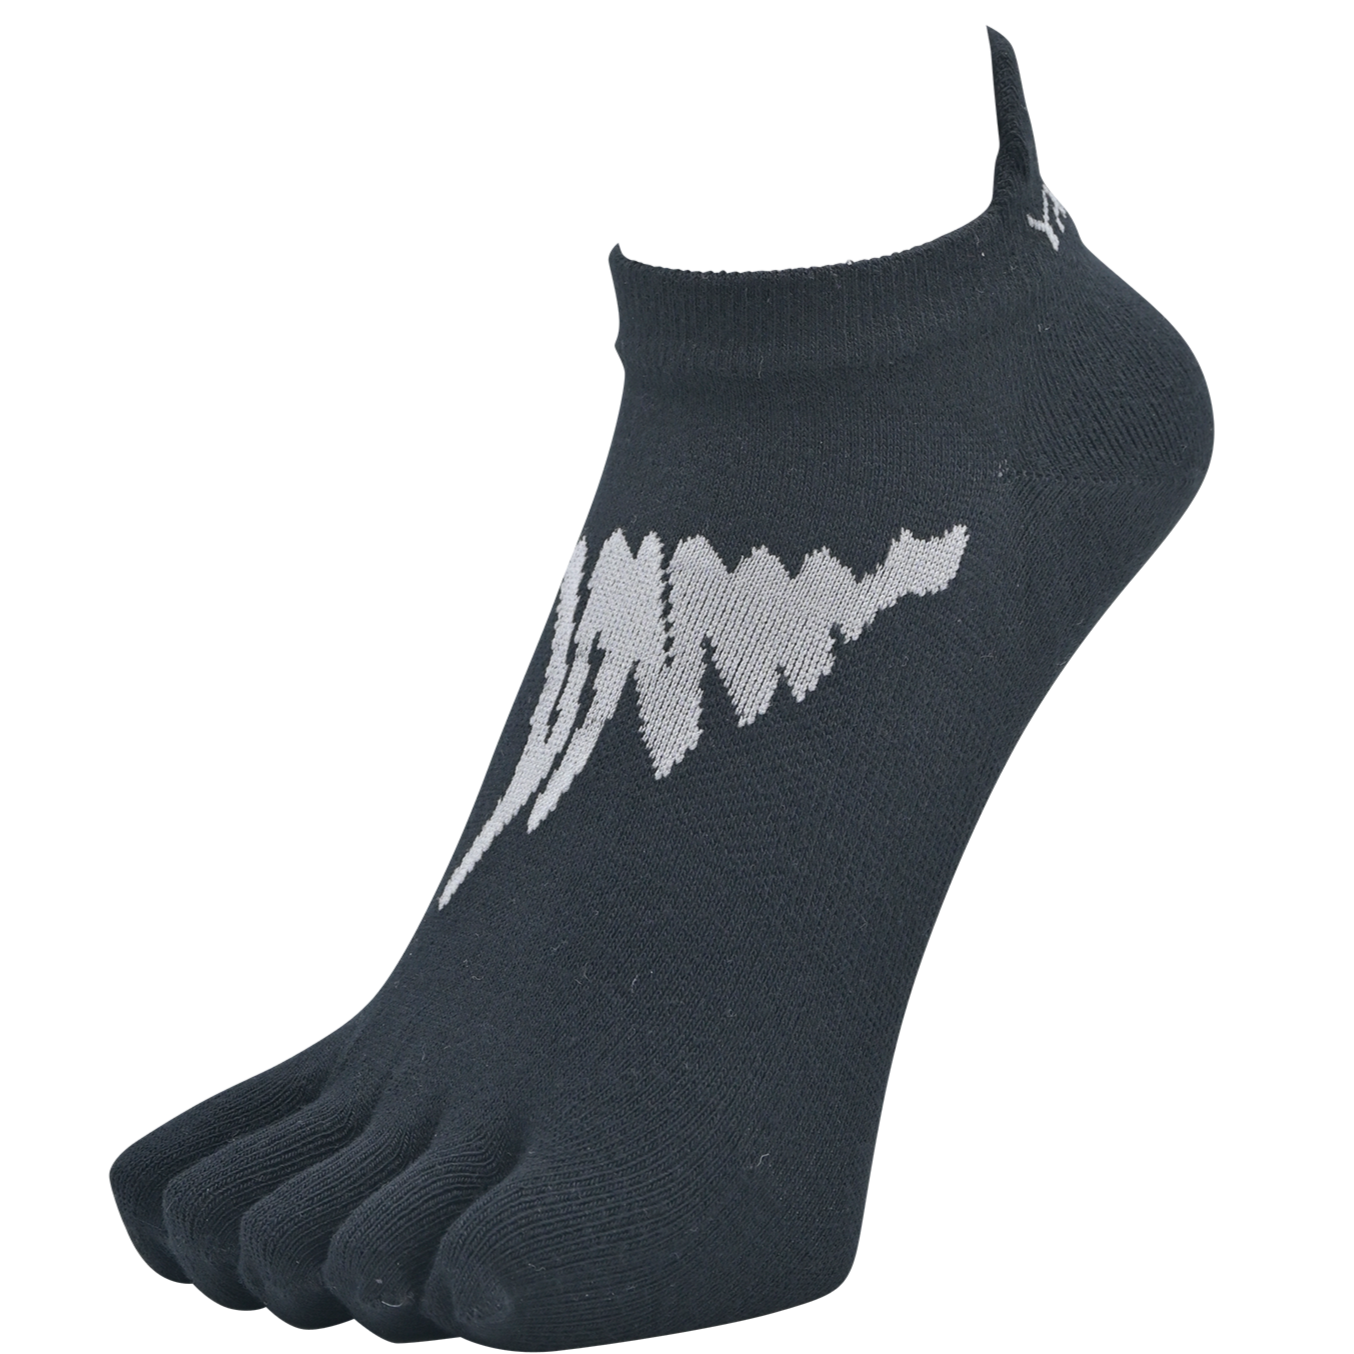 YAMAtune - Track & Field - Short Lightweight 5-Toe Socks - Black/Grey